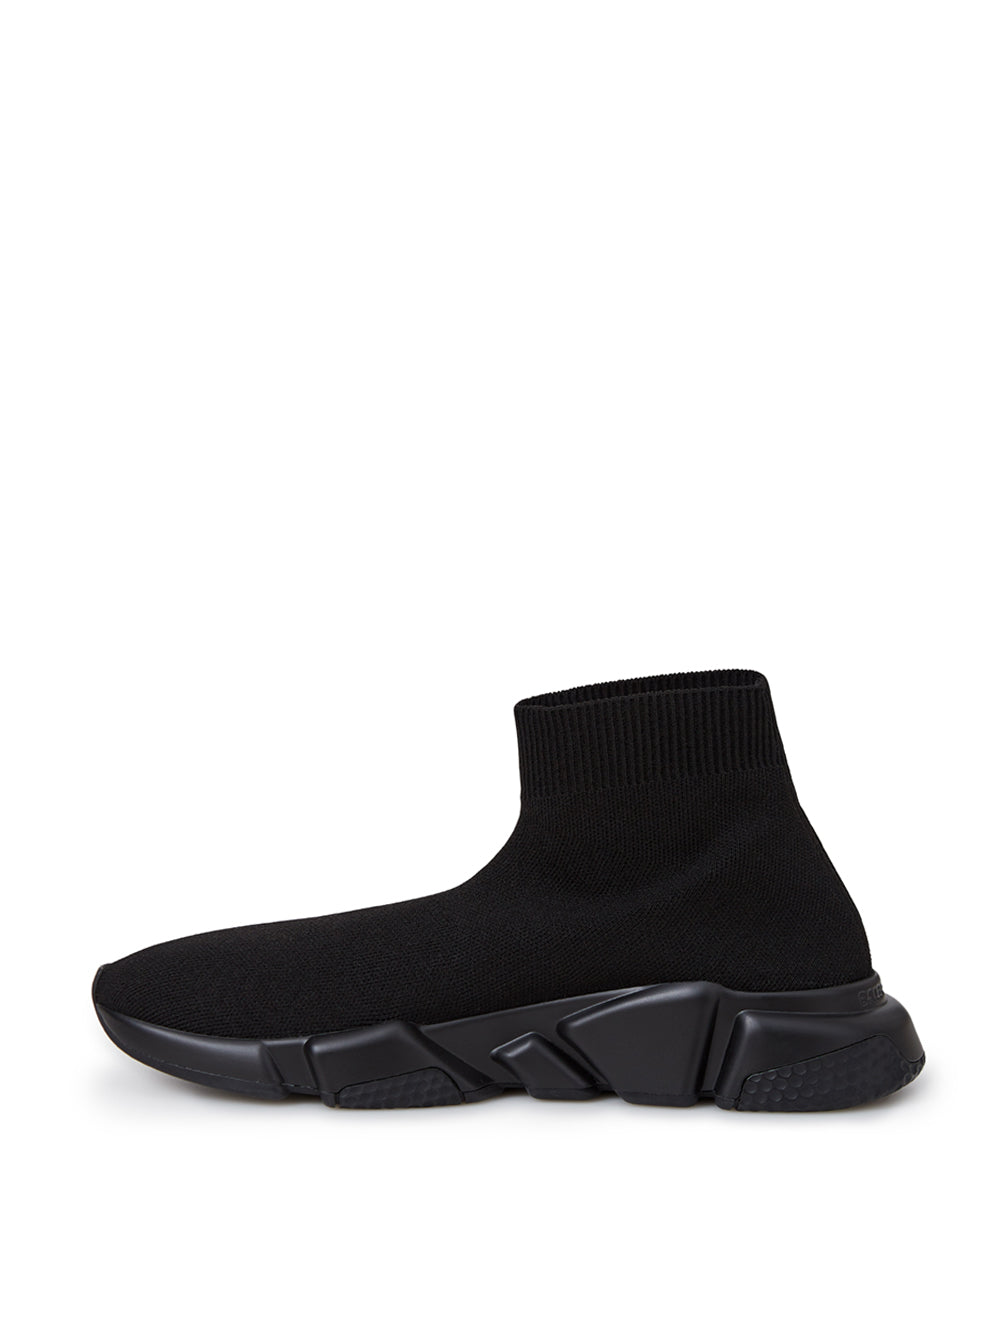 Balenciaga Elegant Black Speed Sneakers for Stylish Comfort